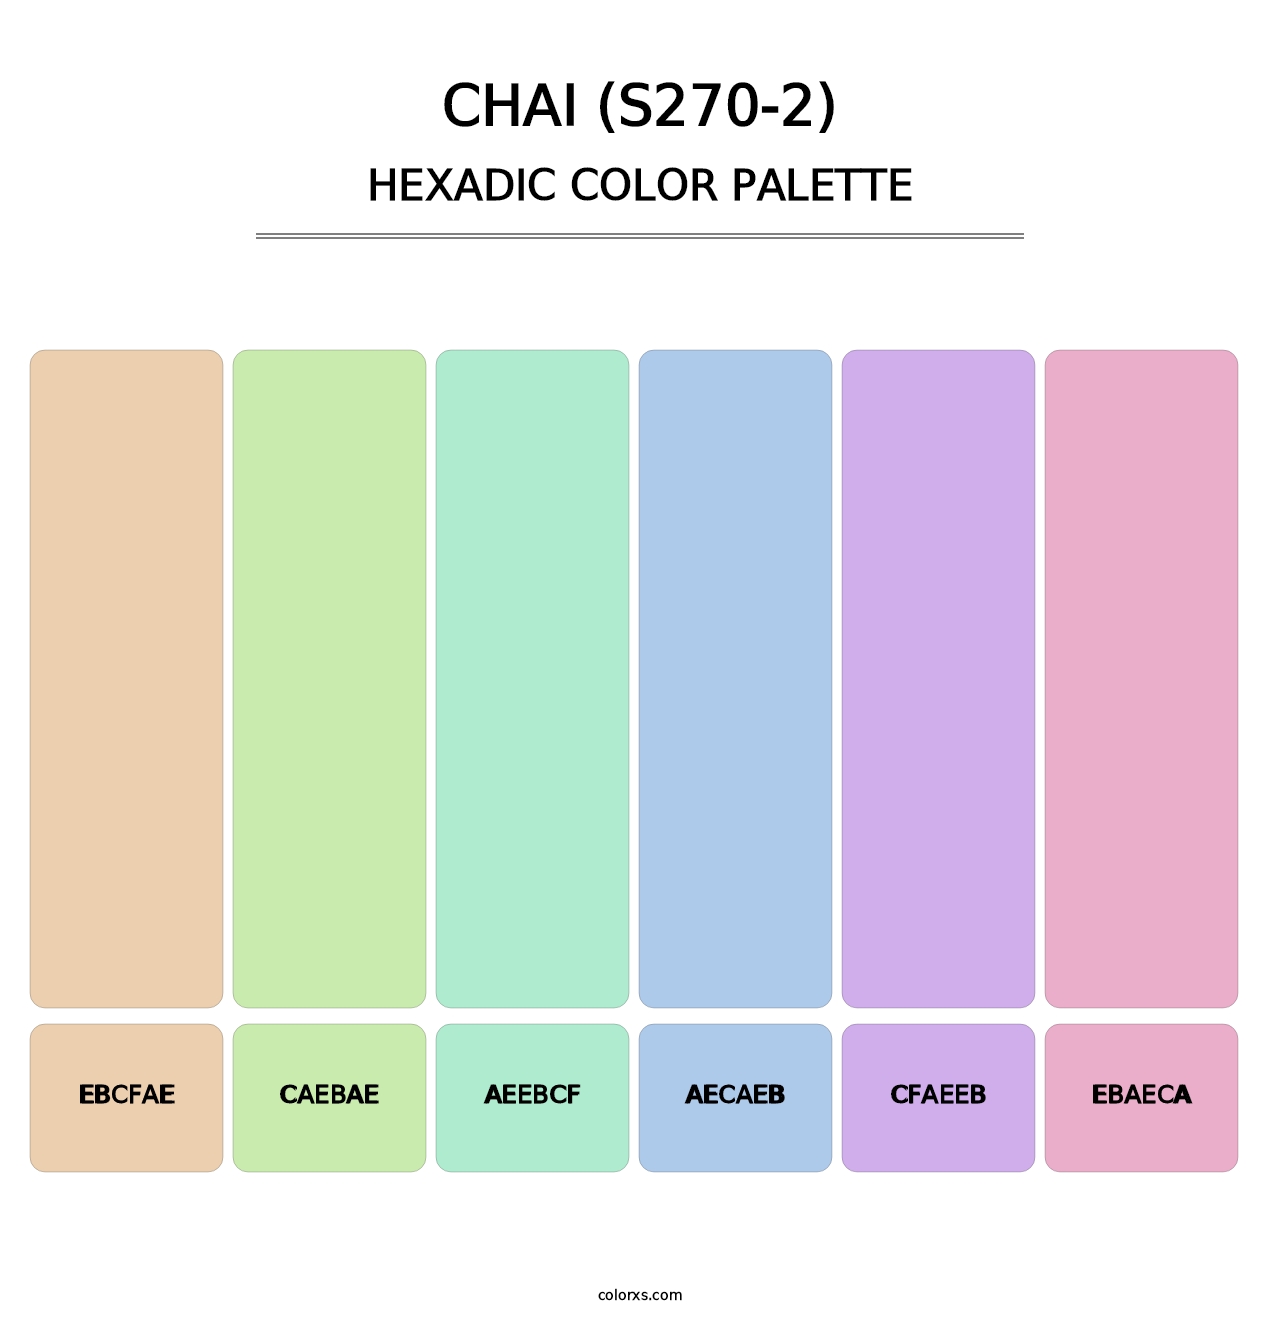 Chai (S270-2) - Hexadic Color Palette